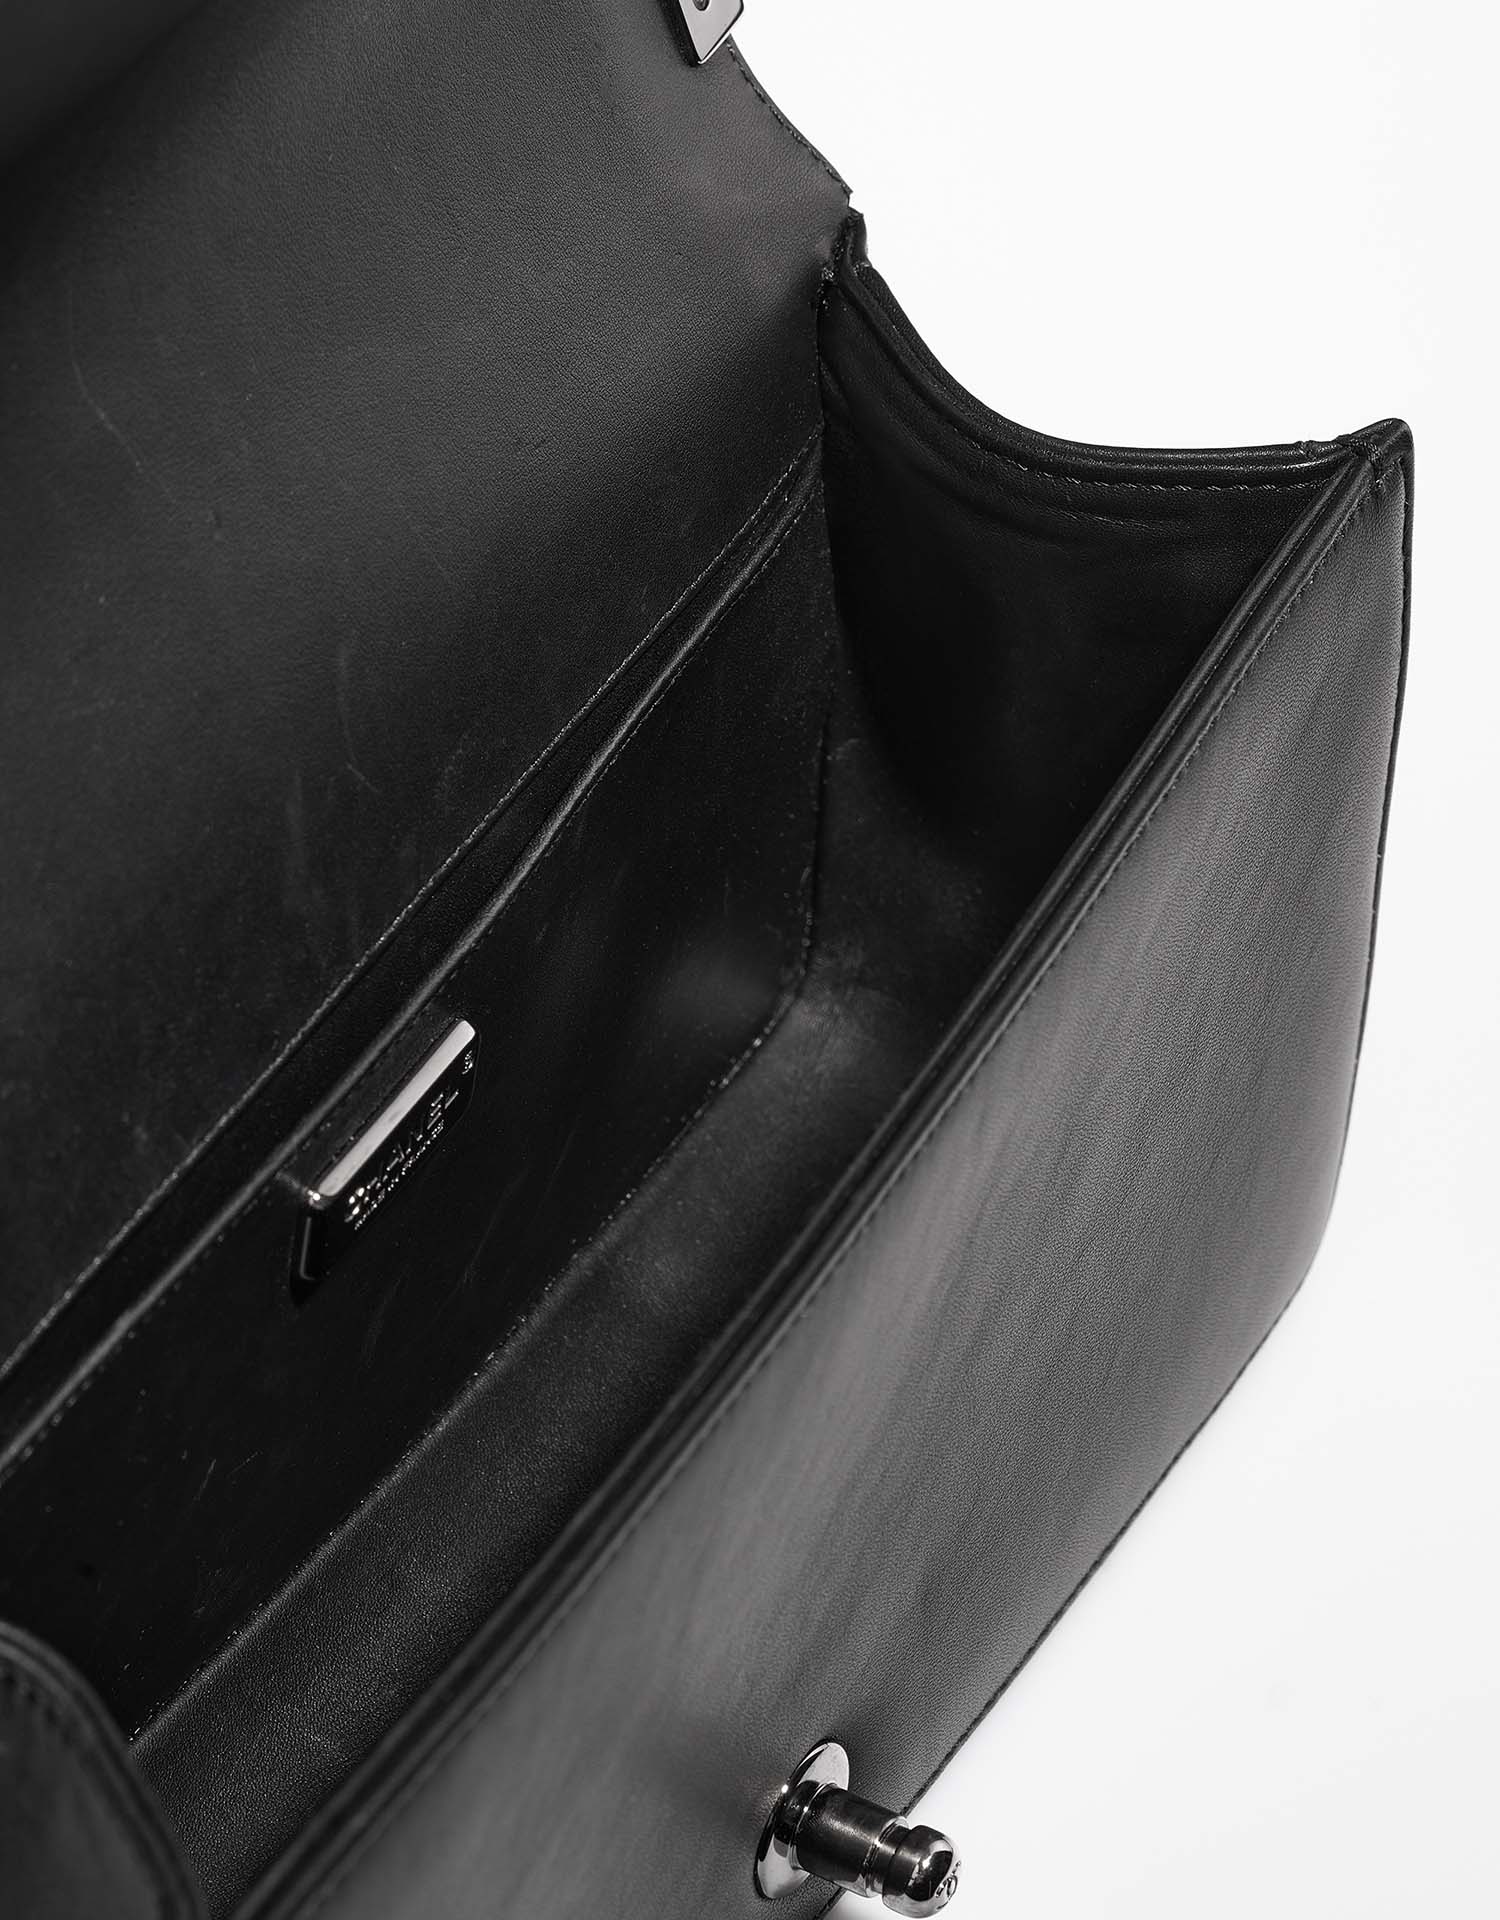 Chanel Boy OldMedium Black Inside  | Sell your designer bag on Saclab.com